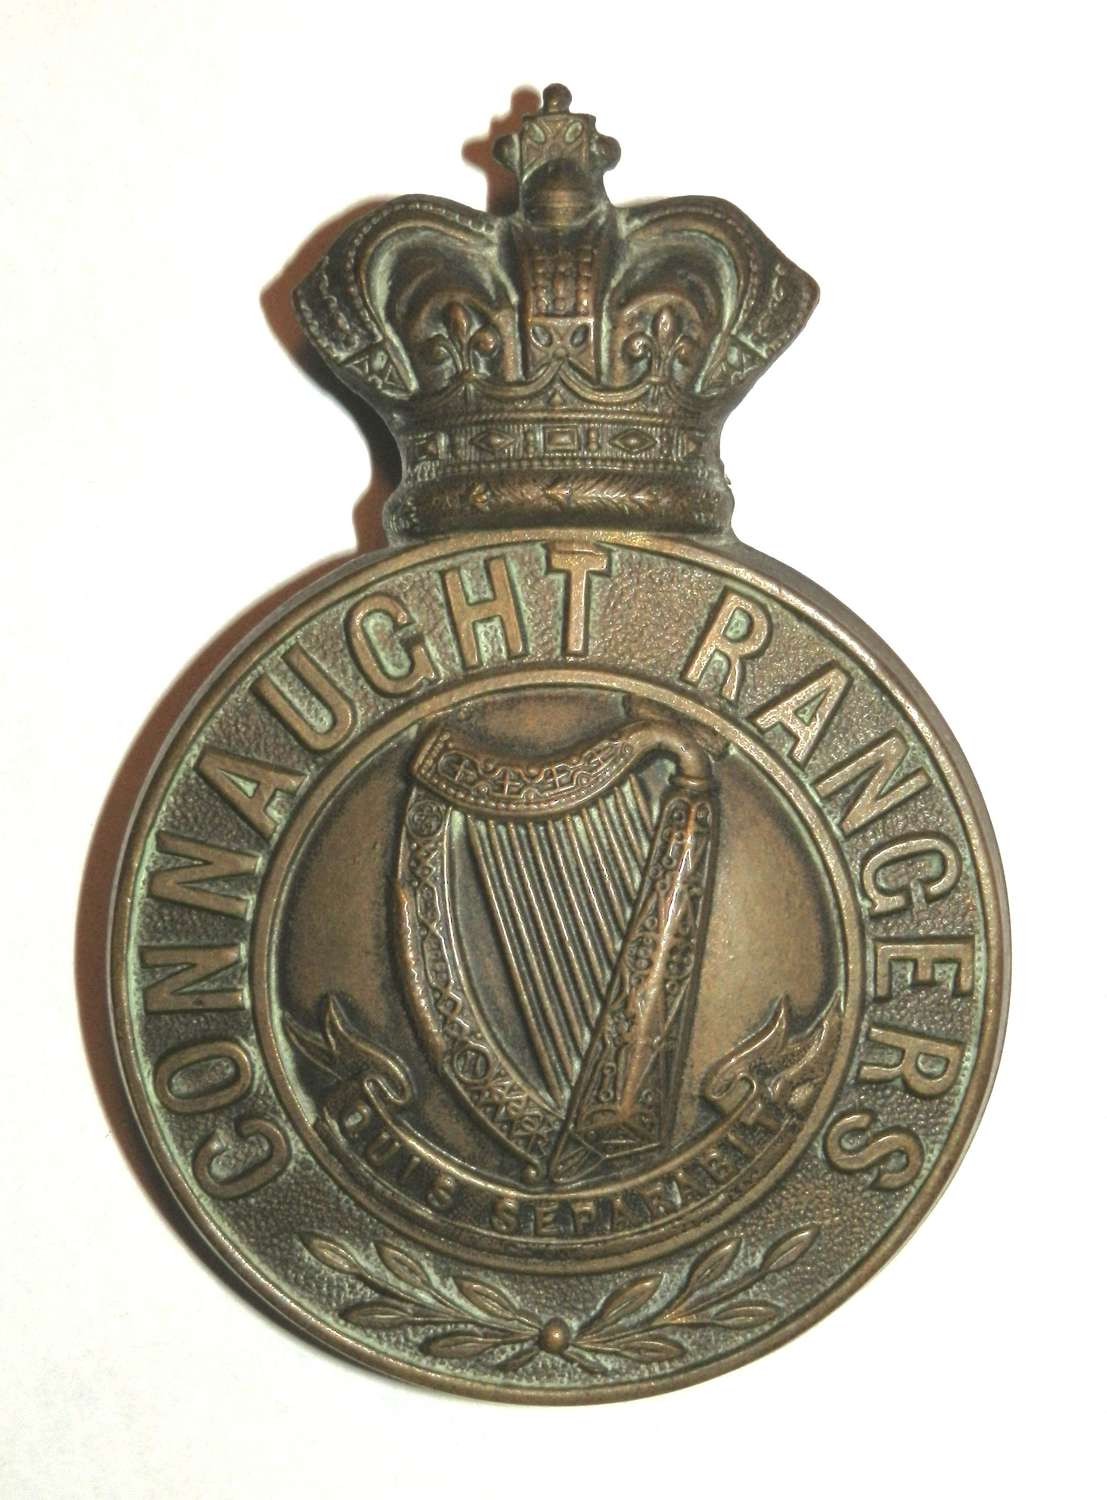 Connaught Rangers, 88th Foot Cap Badge.